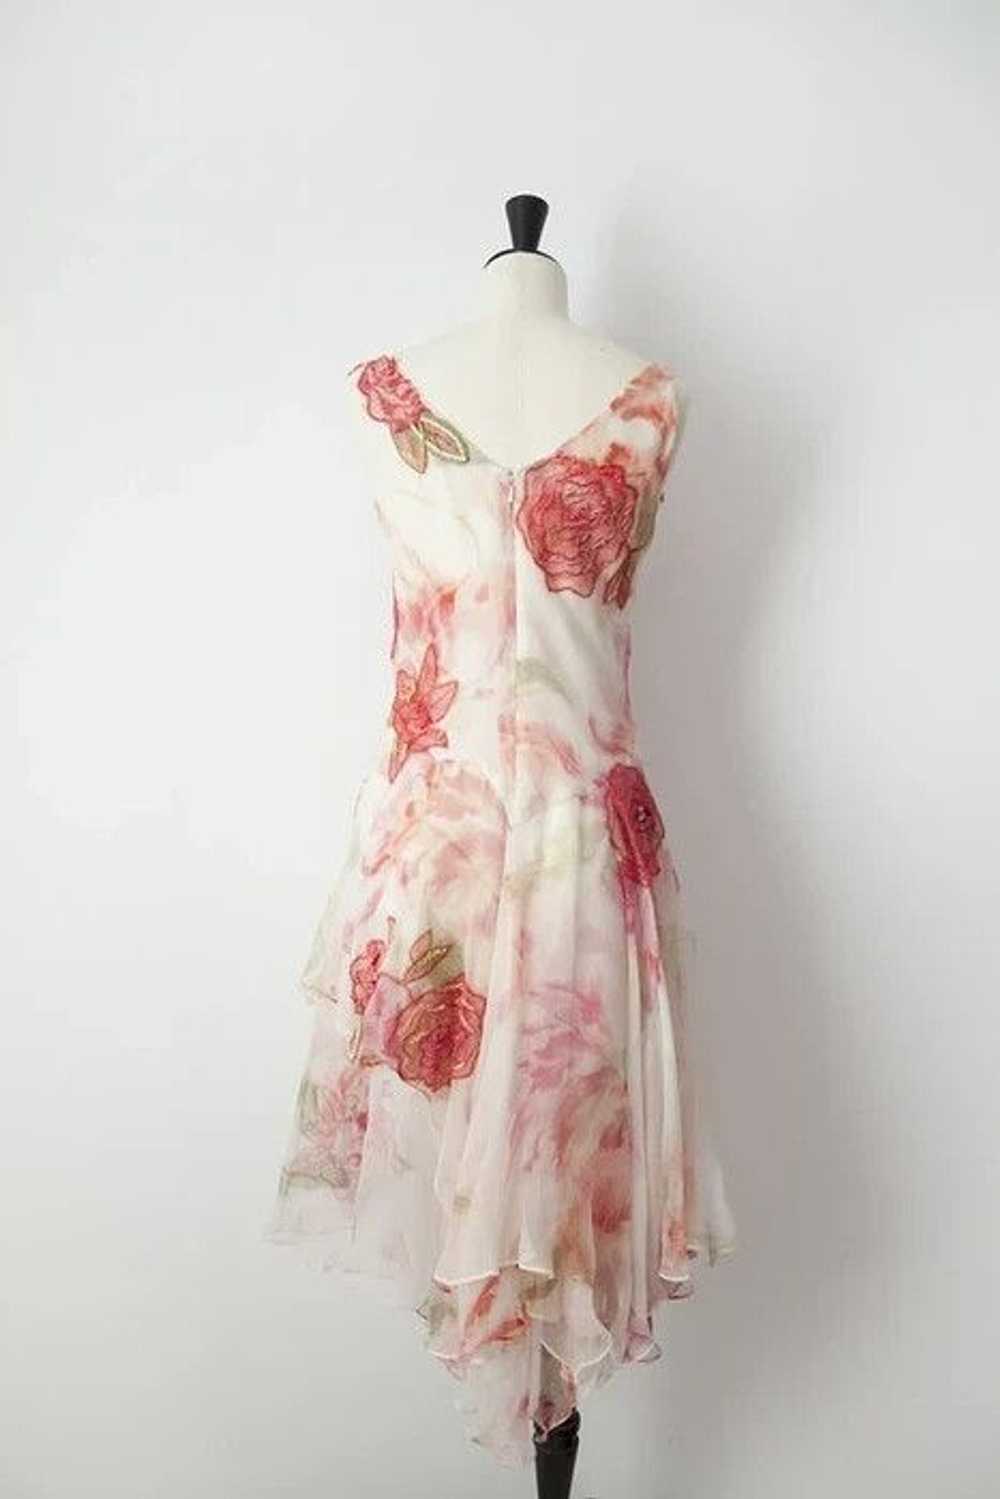 Barney Cools Couture à porter flower dress - image 7